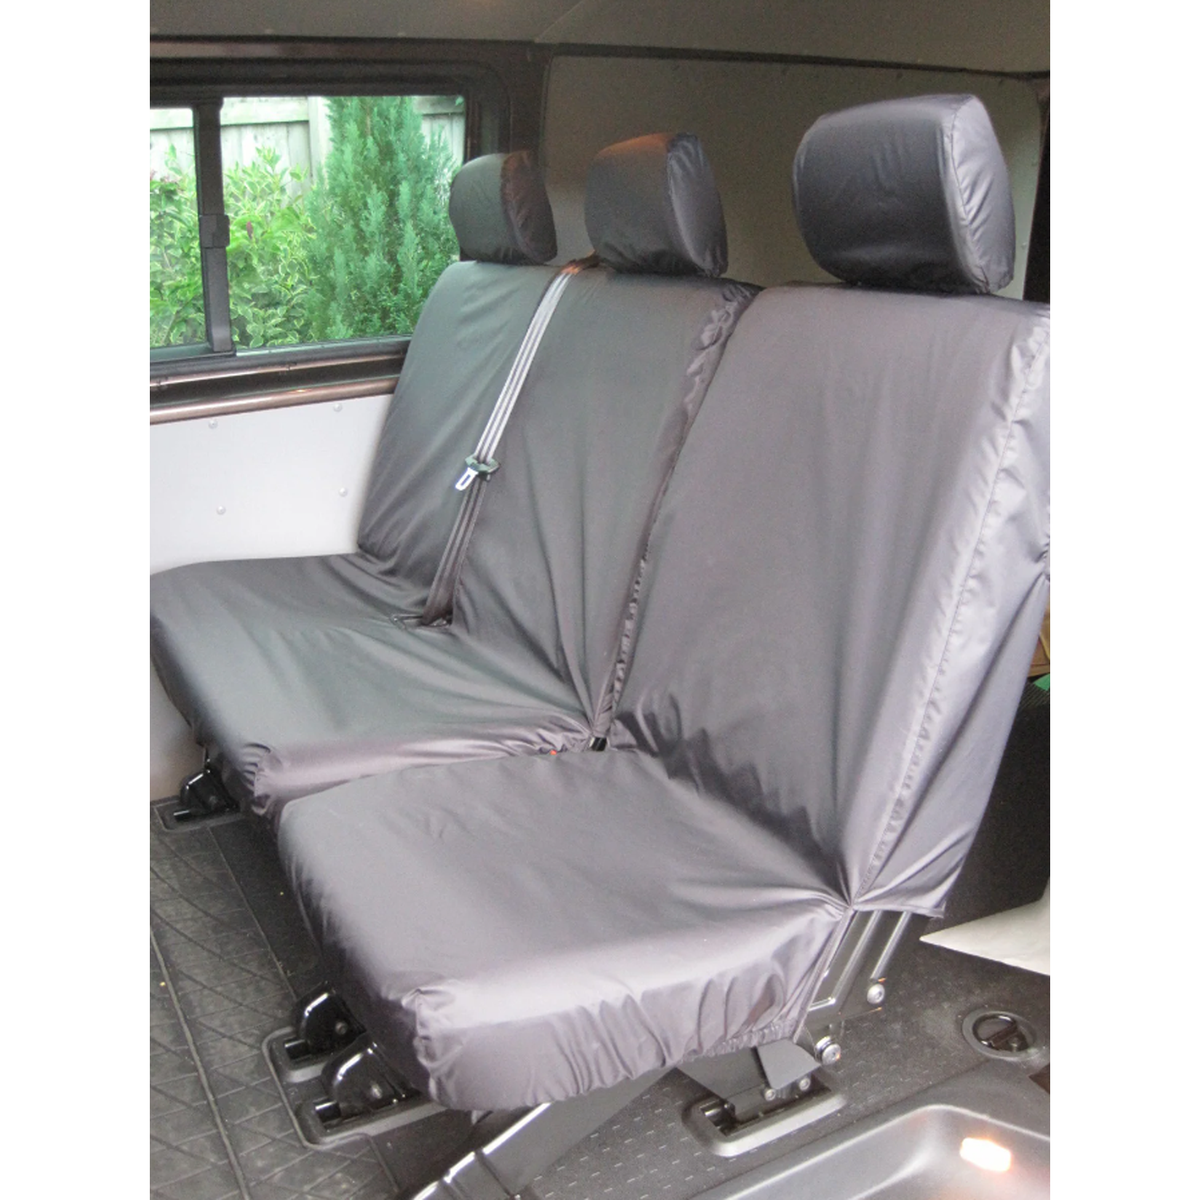 Vw Transporter T5 2003-2009 Rear Single Double Seat Covers - Black